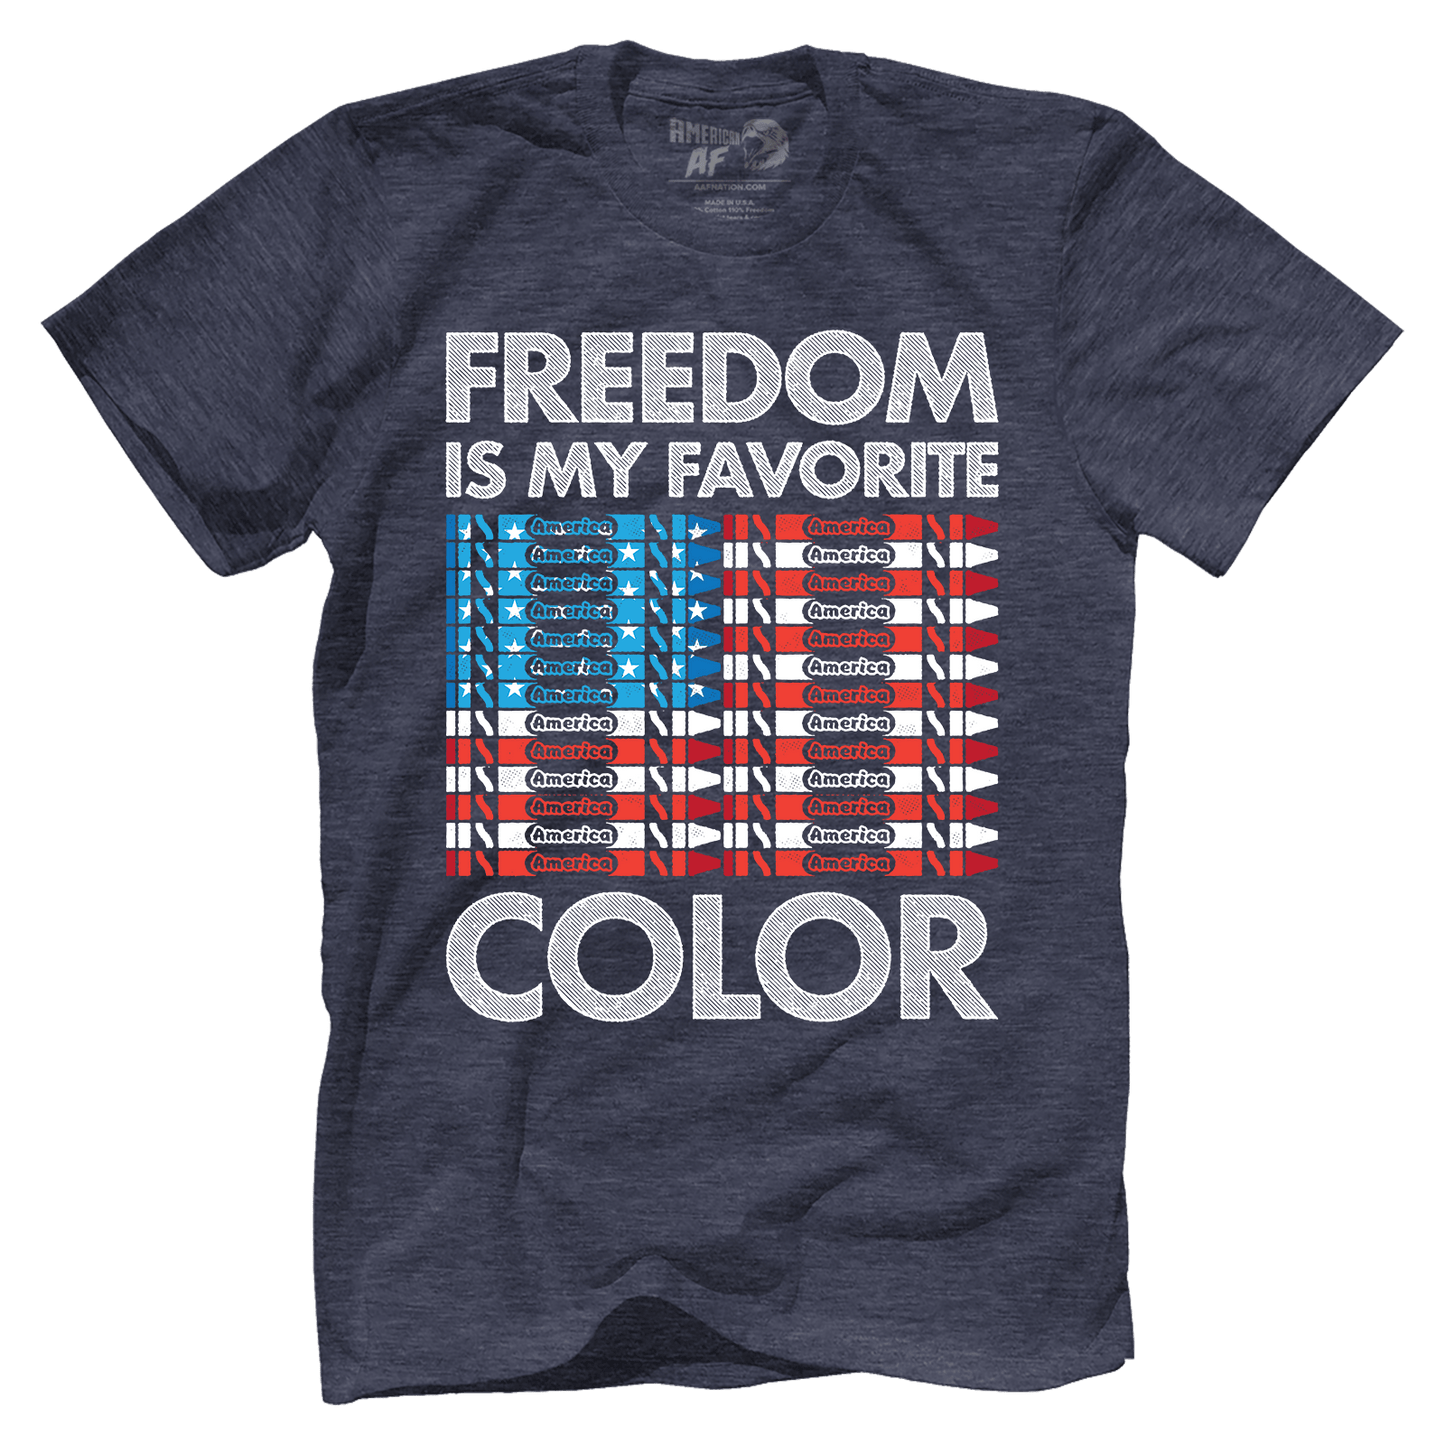 Apparel Premium Mens Triblend Shirt / Vintage Navy / S Freedom is my Favorite Color